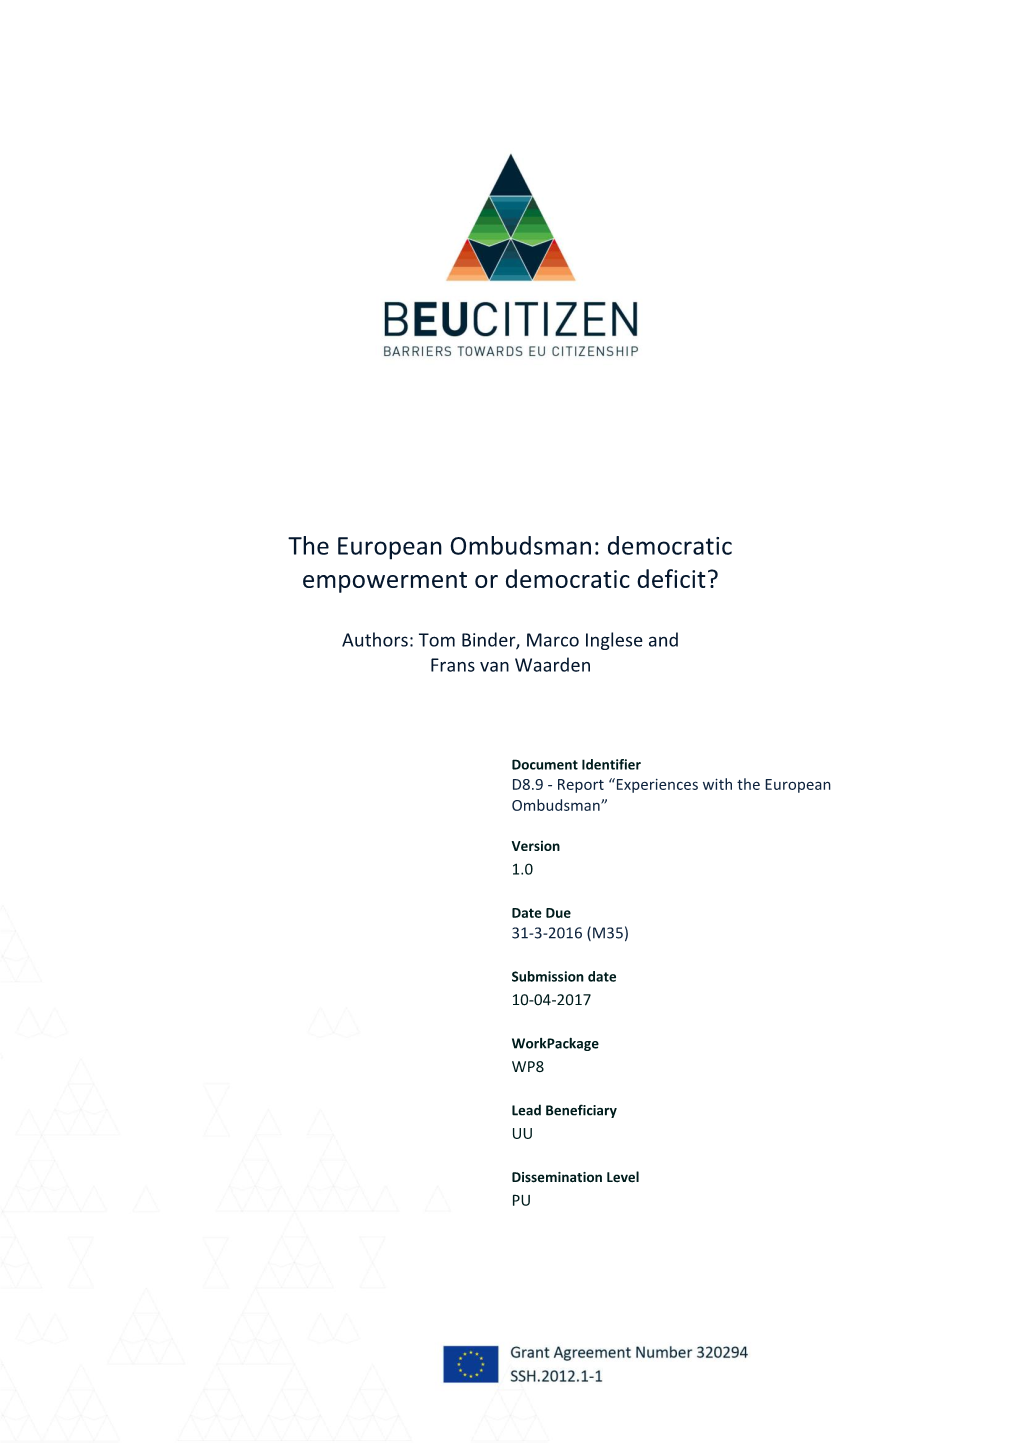 The European Ombudsman: Democratic Empowerment Or Democratic Deficit?